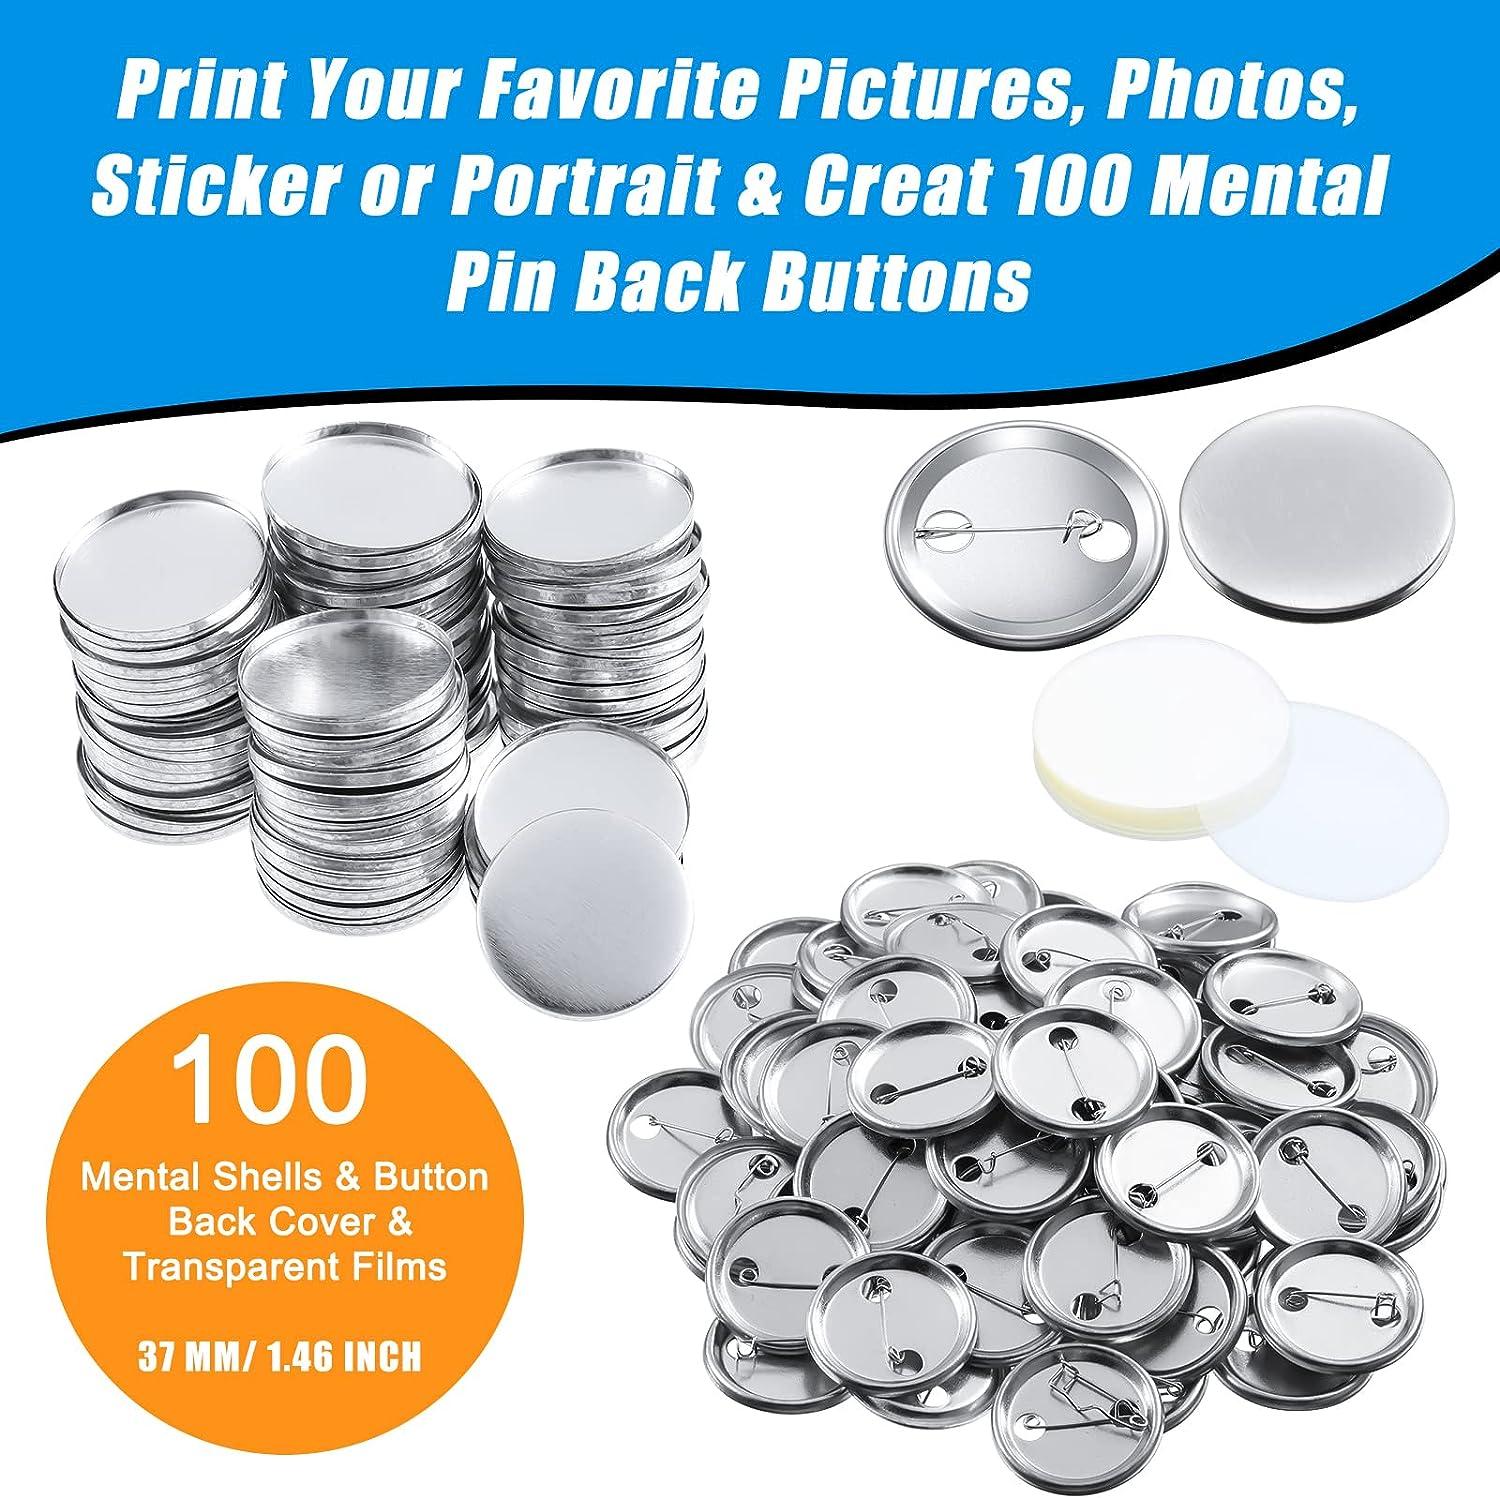 Round Metallic Buttons, Custom Pins